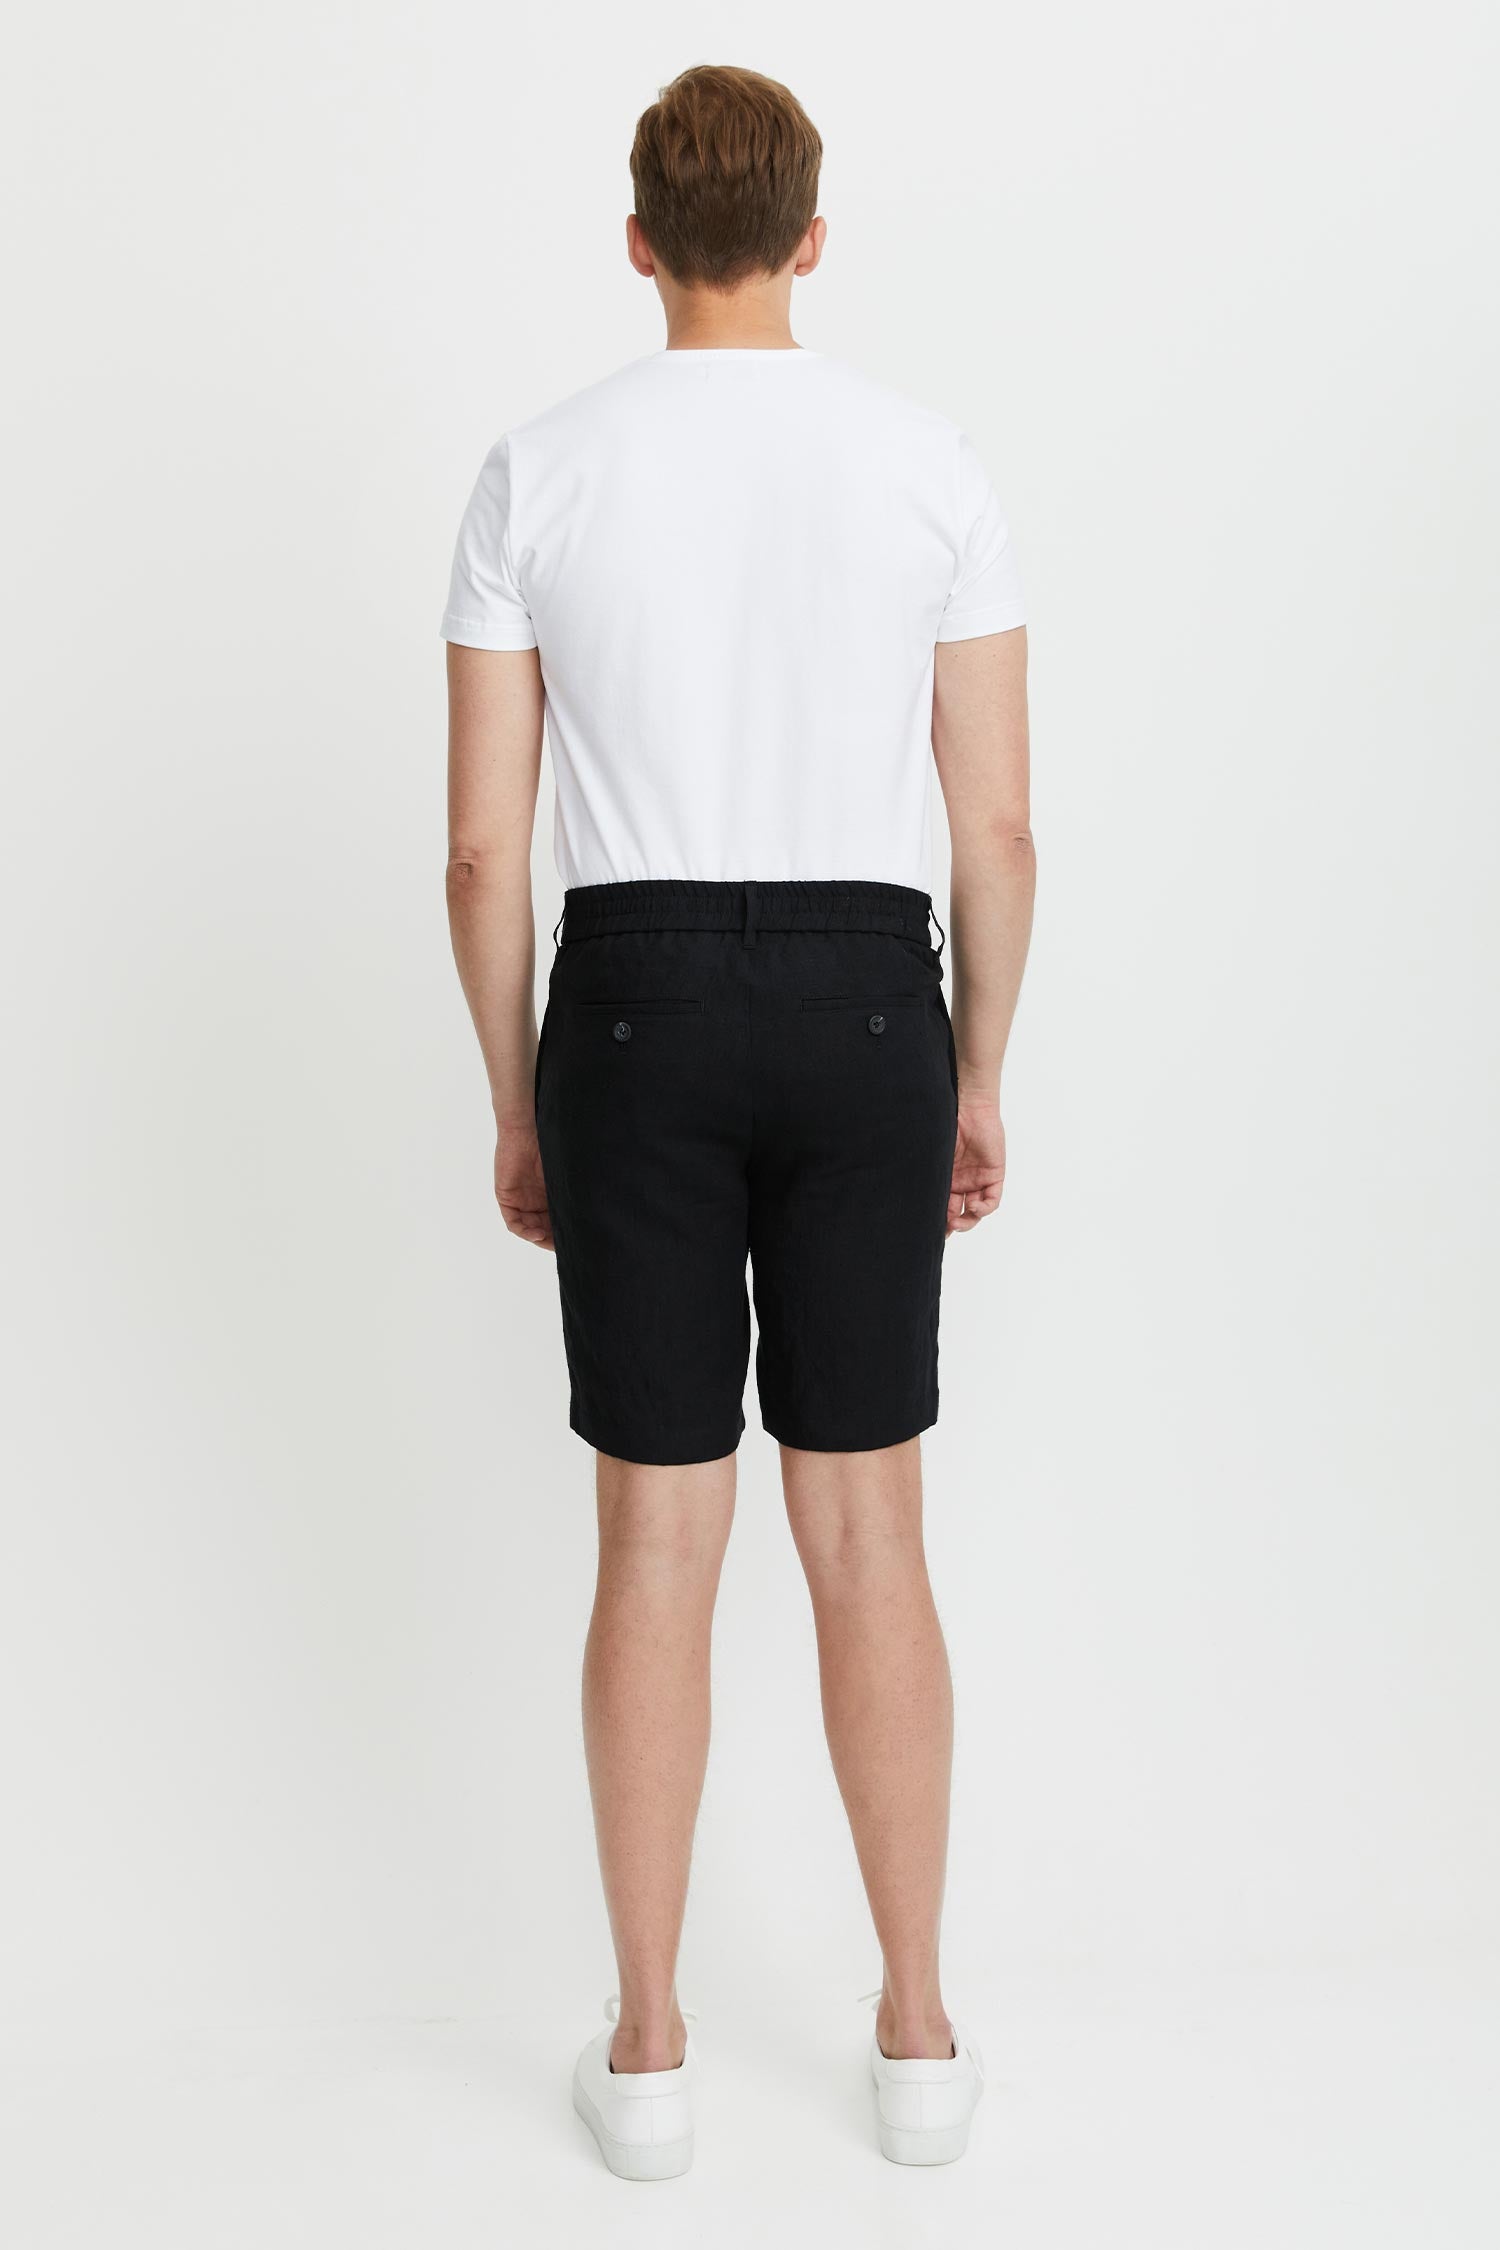 Frenn Teppo premium quality sustainable linen shorts black